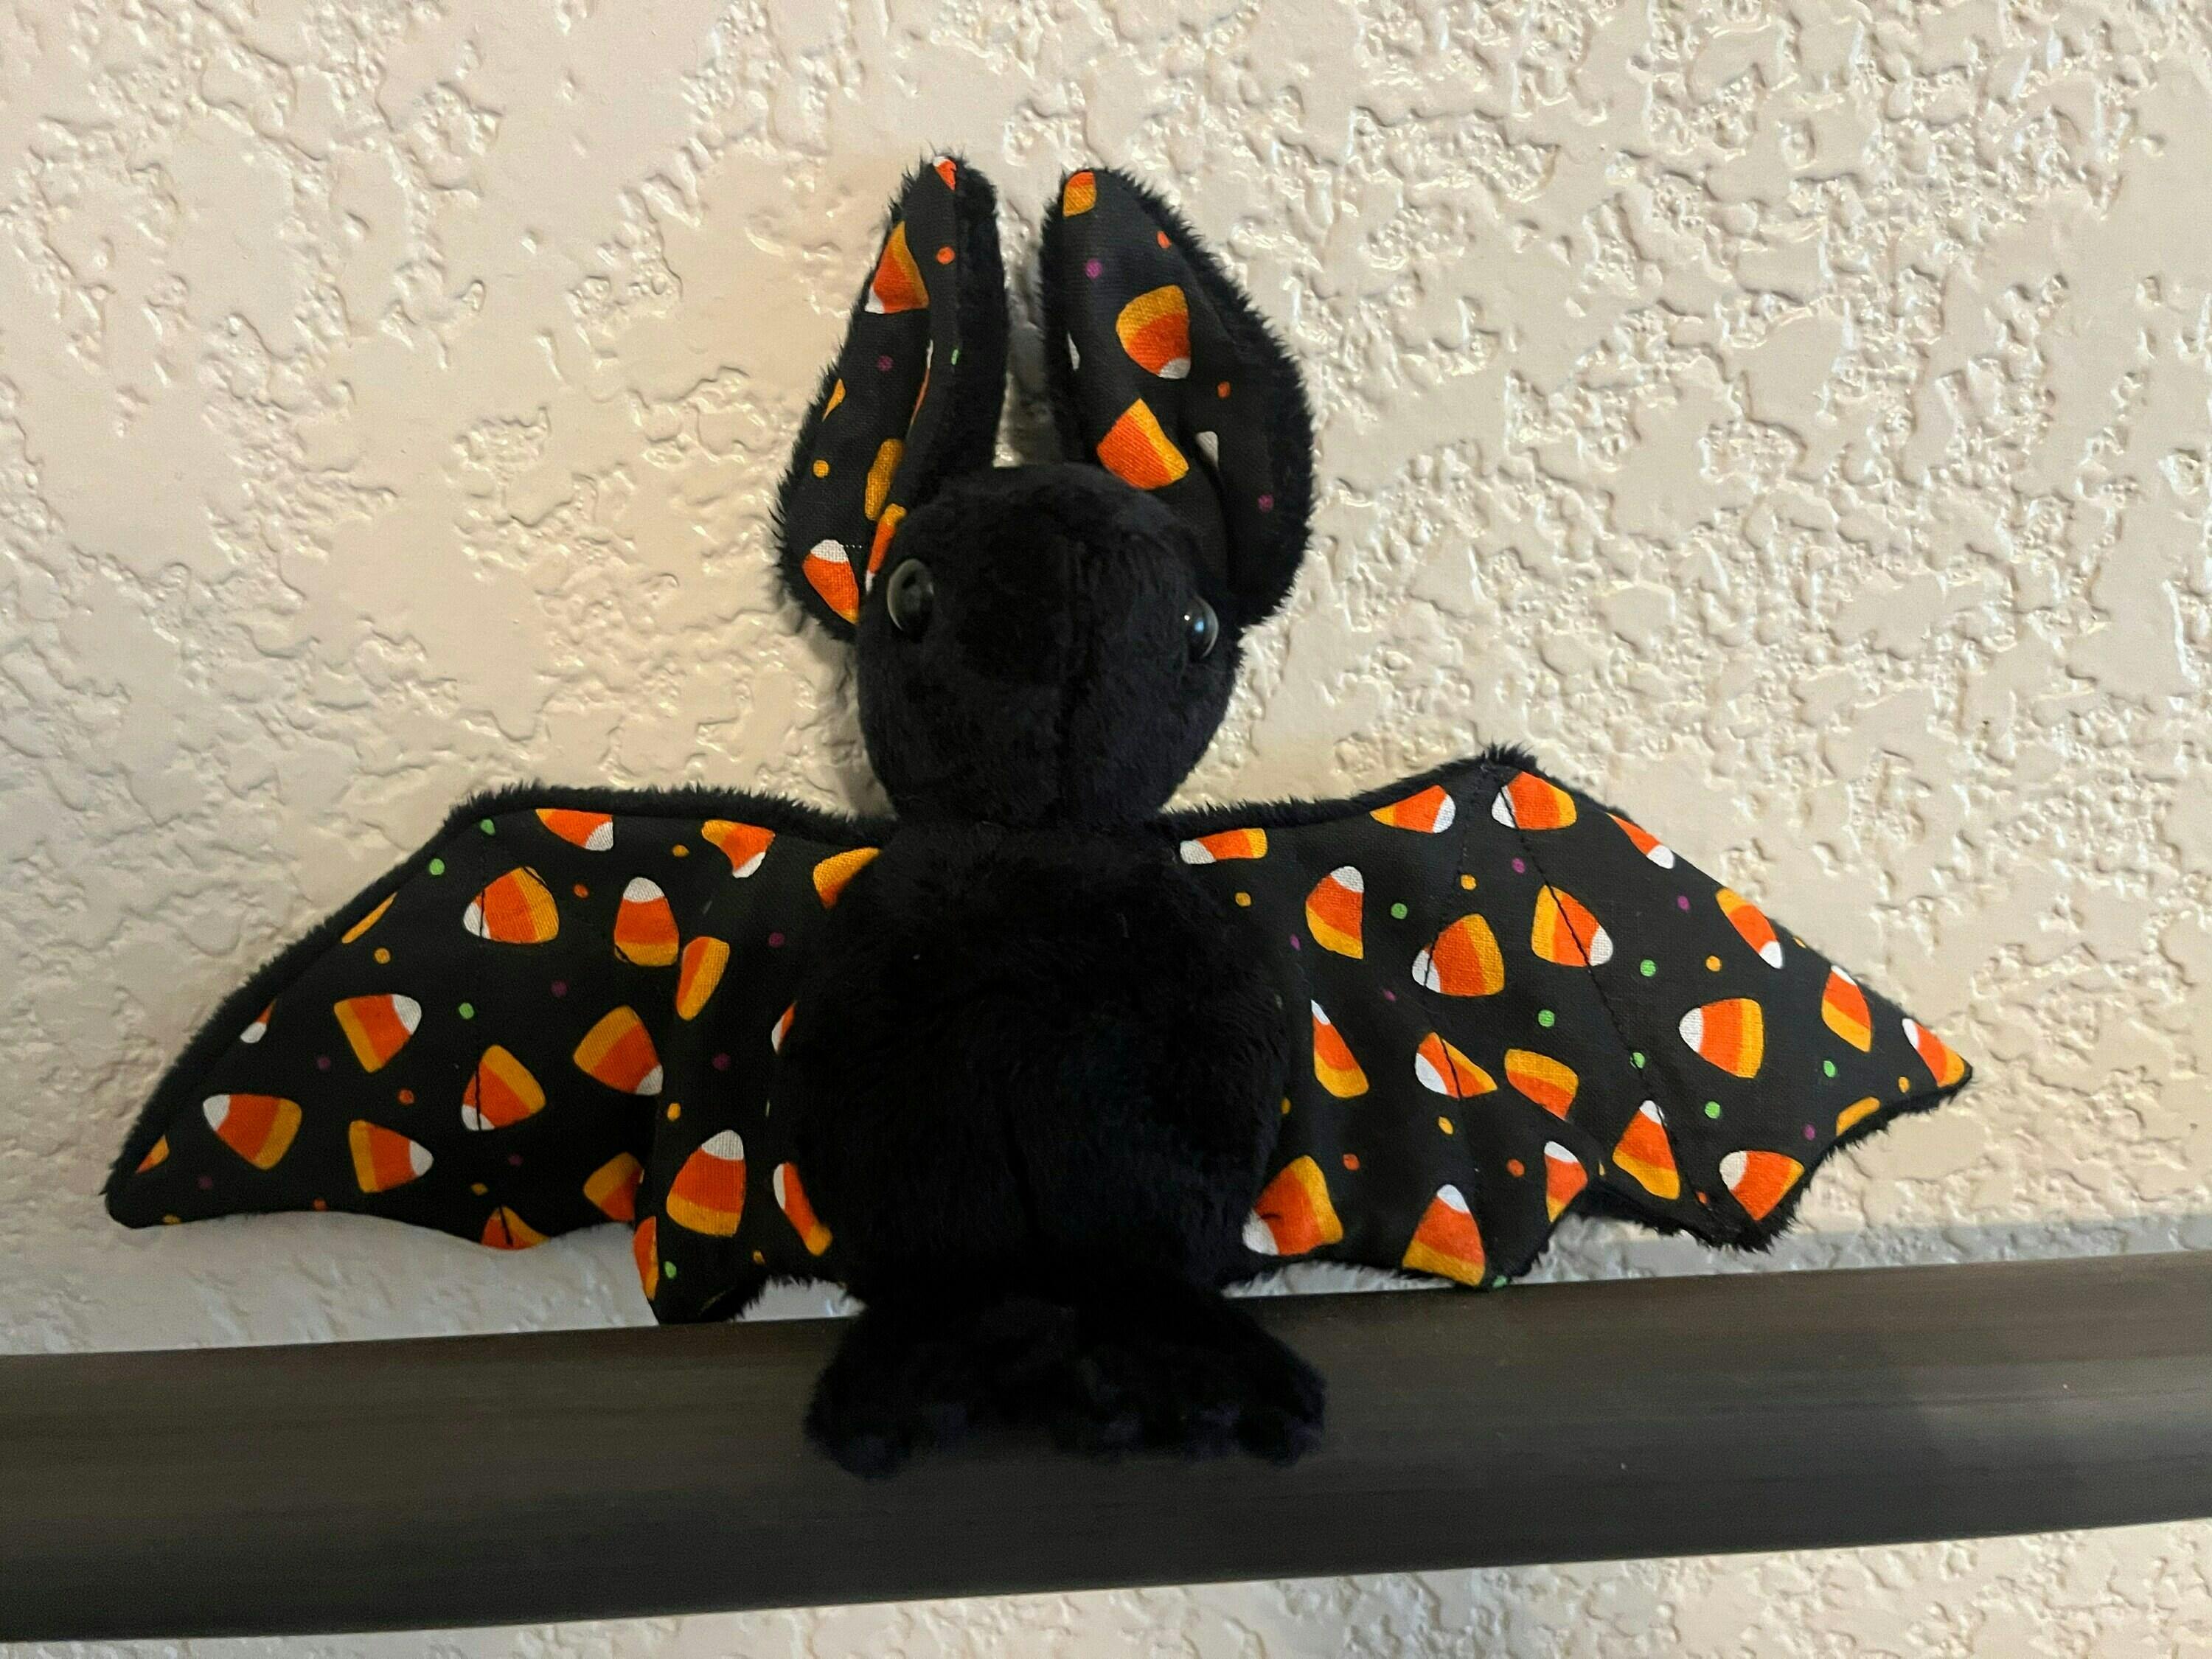 Bat Stuffed Animal Sewing Pattern - Digital Download